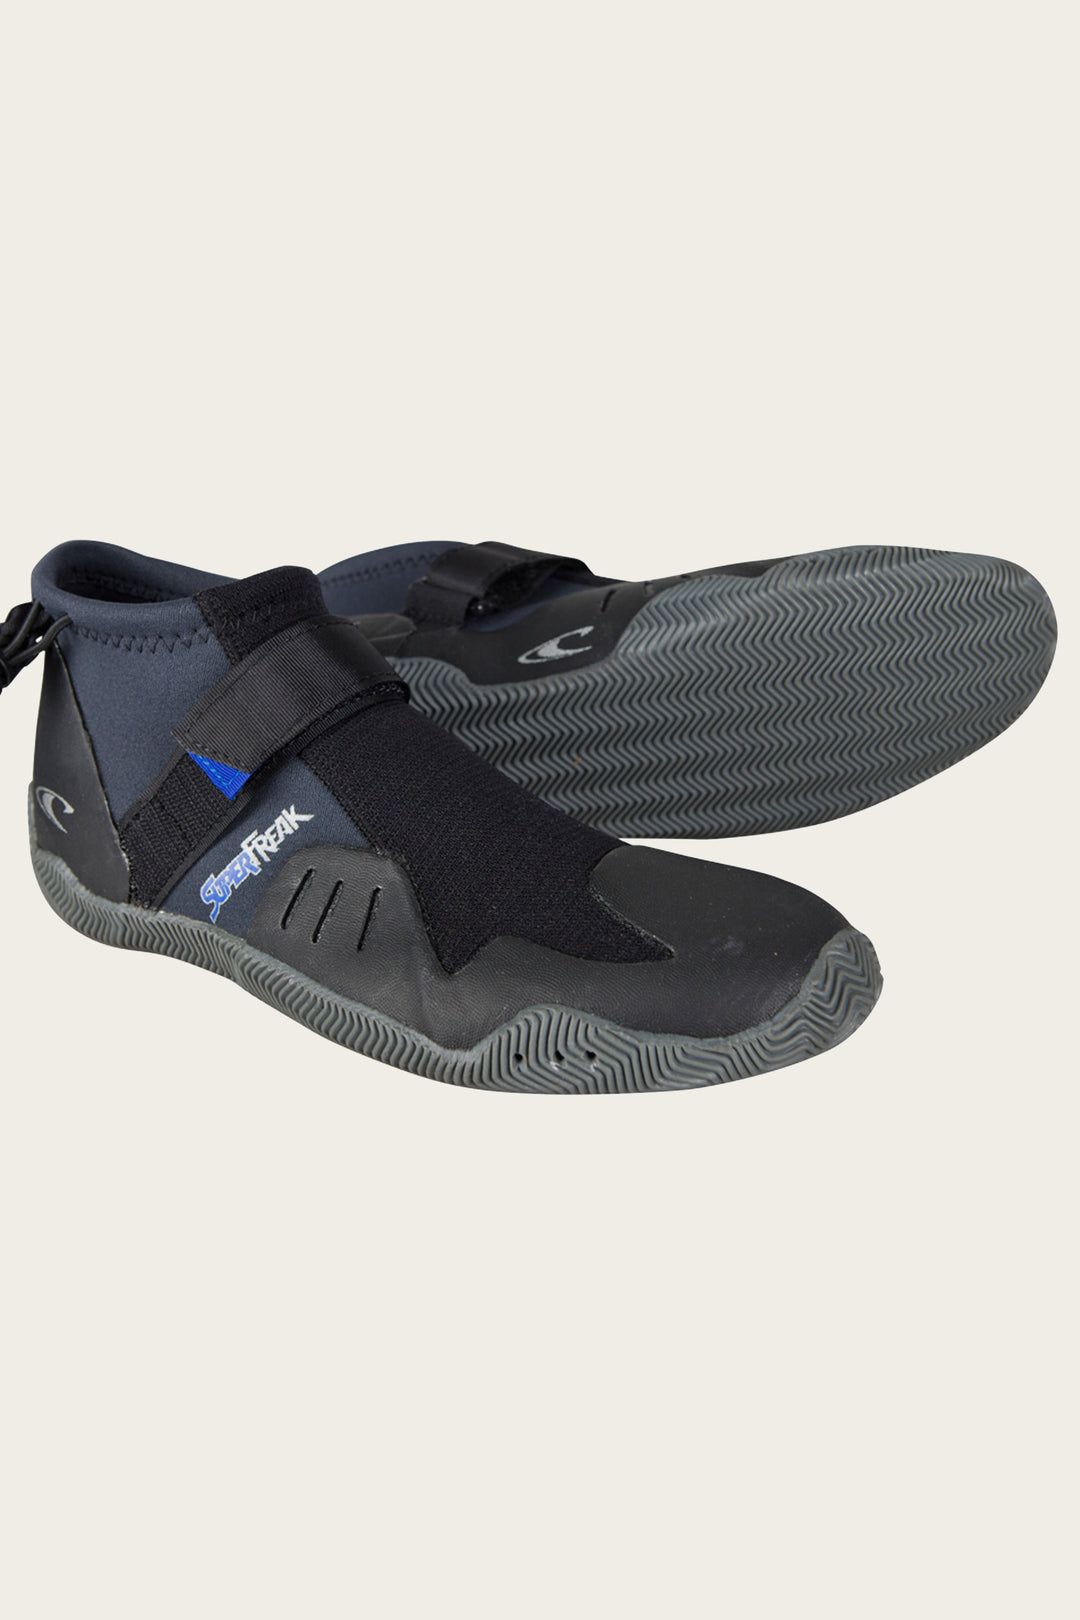 Superfreak Tropical 2mm Reef Boot-O'Neill-black,boot,booties,logo,o'neill,oneill wetsuit,wetsuit